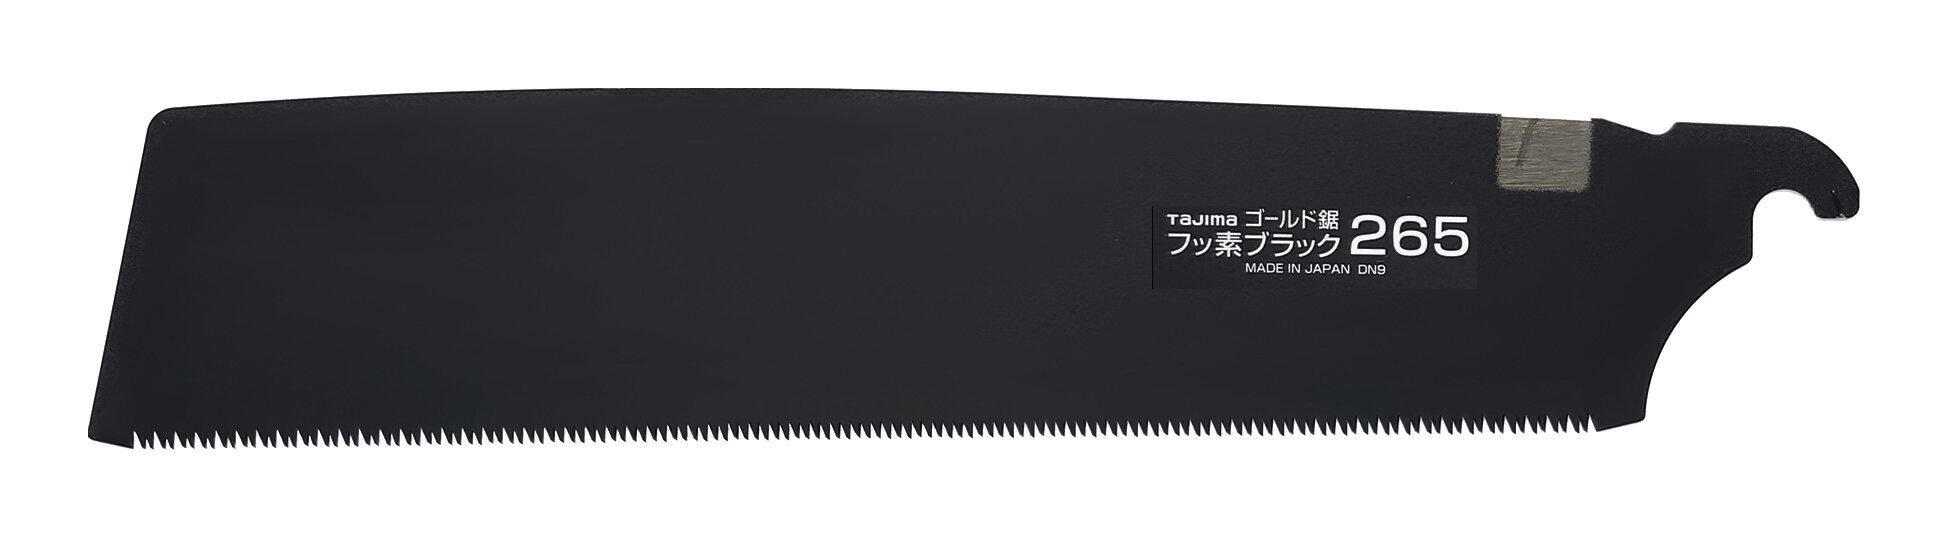 Tajima Handsäge, Sägeblatt 265 mm für Zugsäge Fluro Coat Black